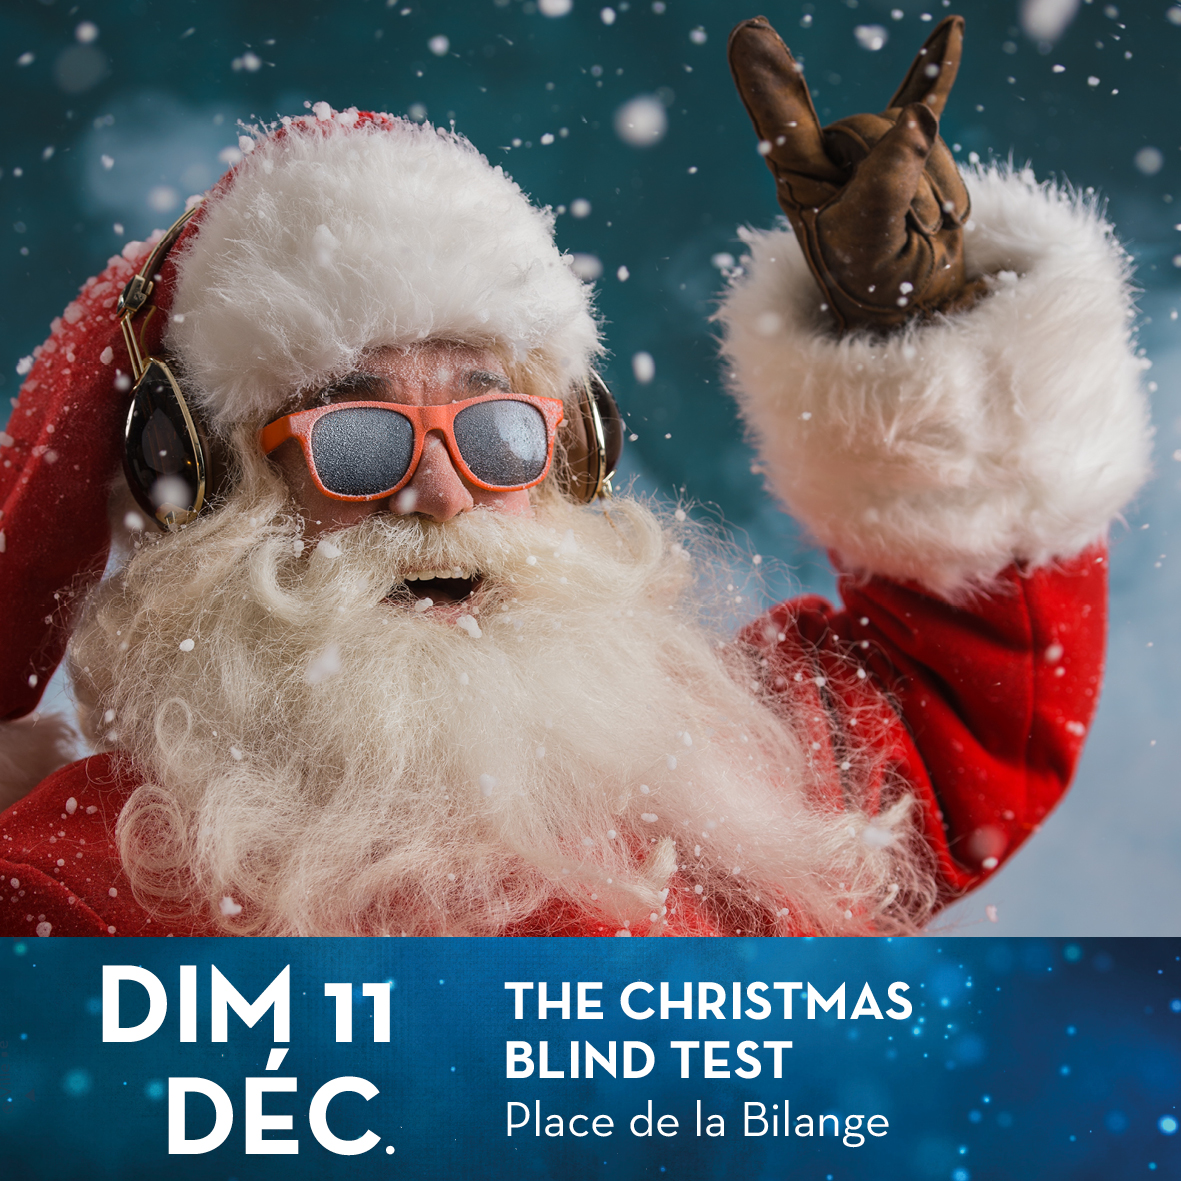 THE CHRISTMAS BLIND TEST